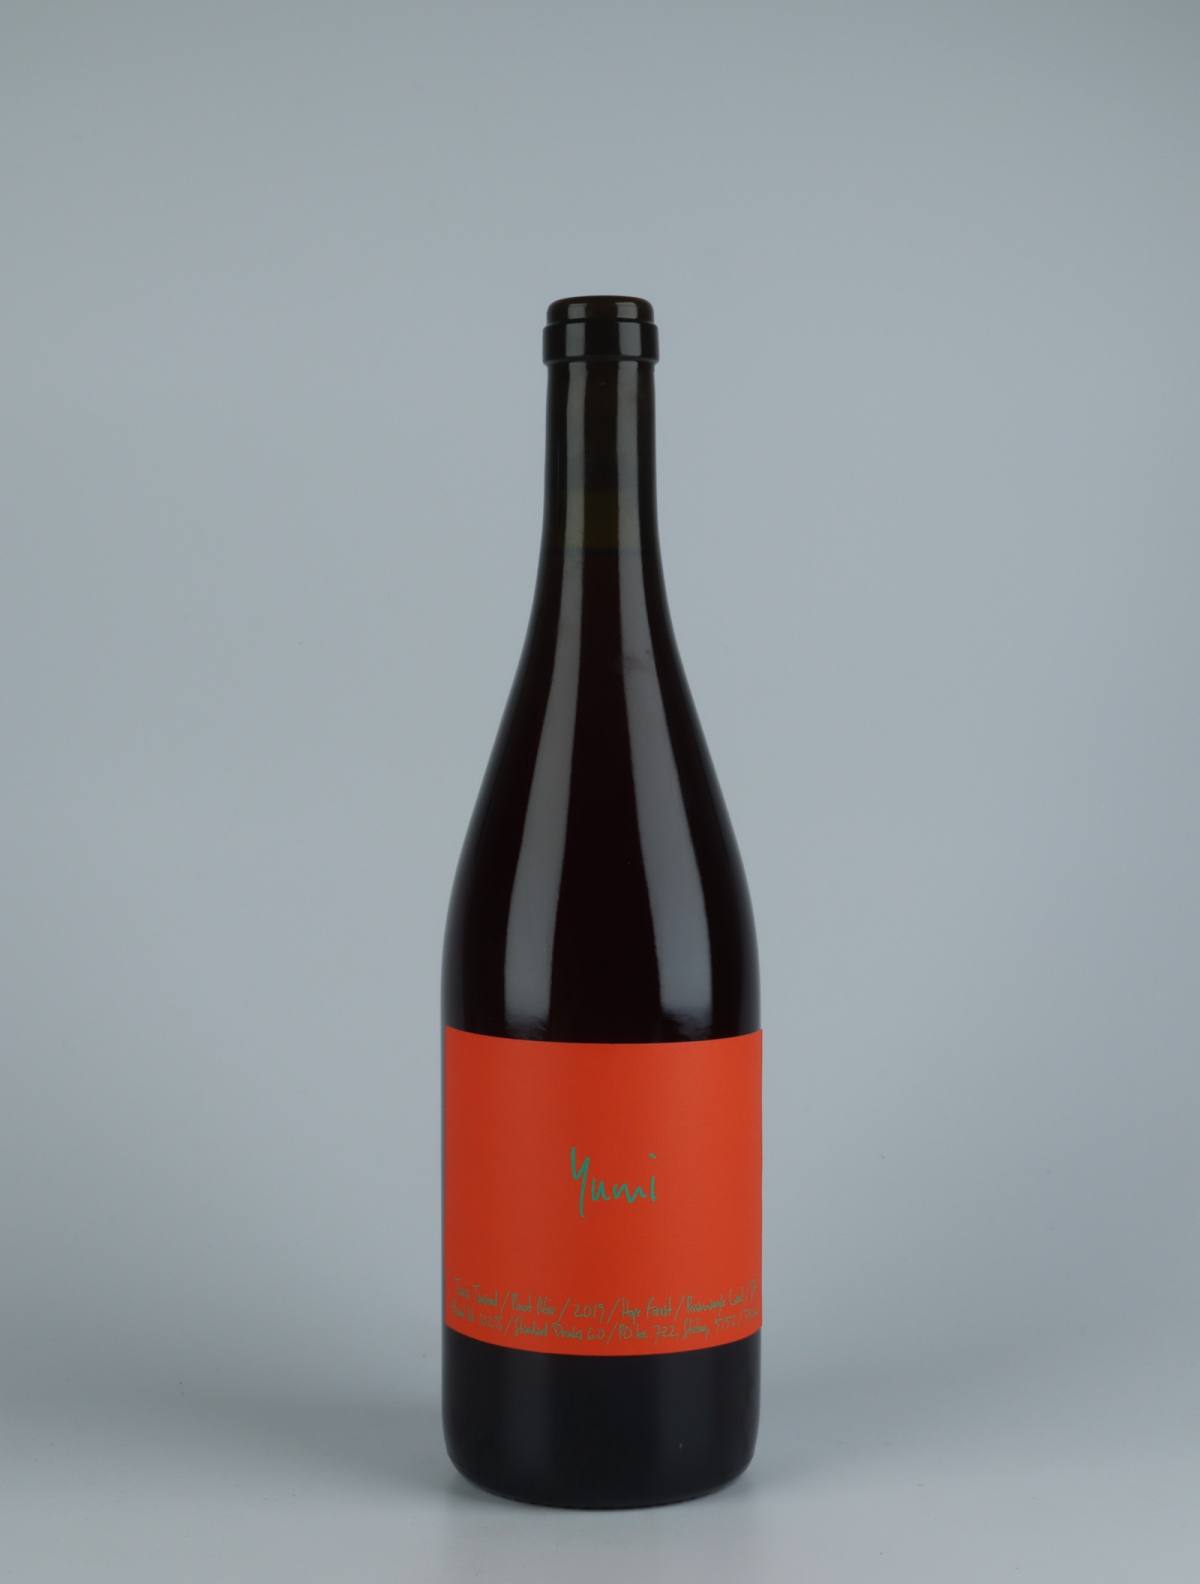 En flaske 2019 Yumi Pinot Noir Rødvin fra Travis Tausend, Adelaide Hills i Australien